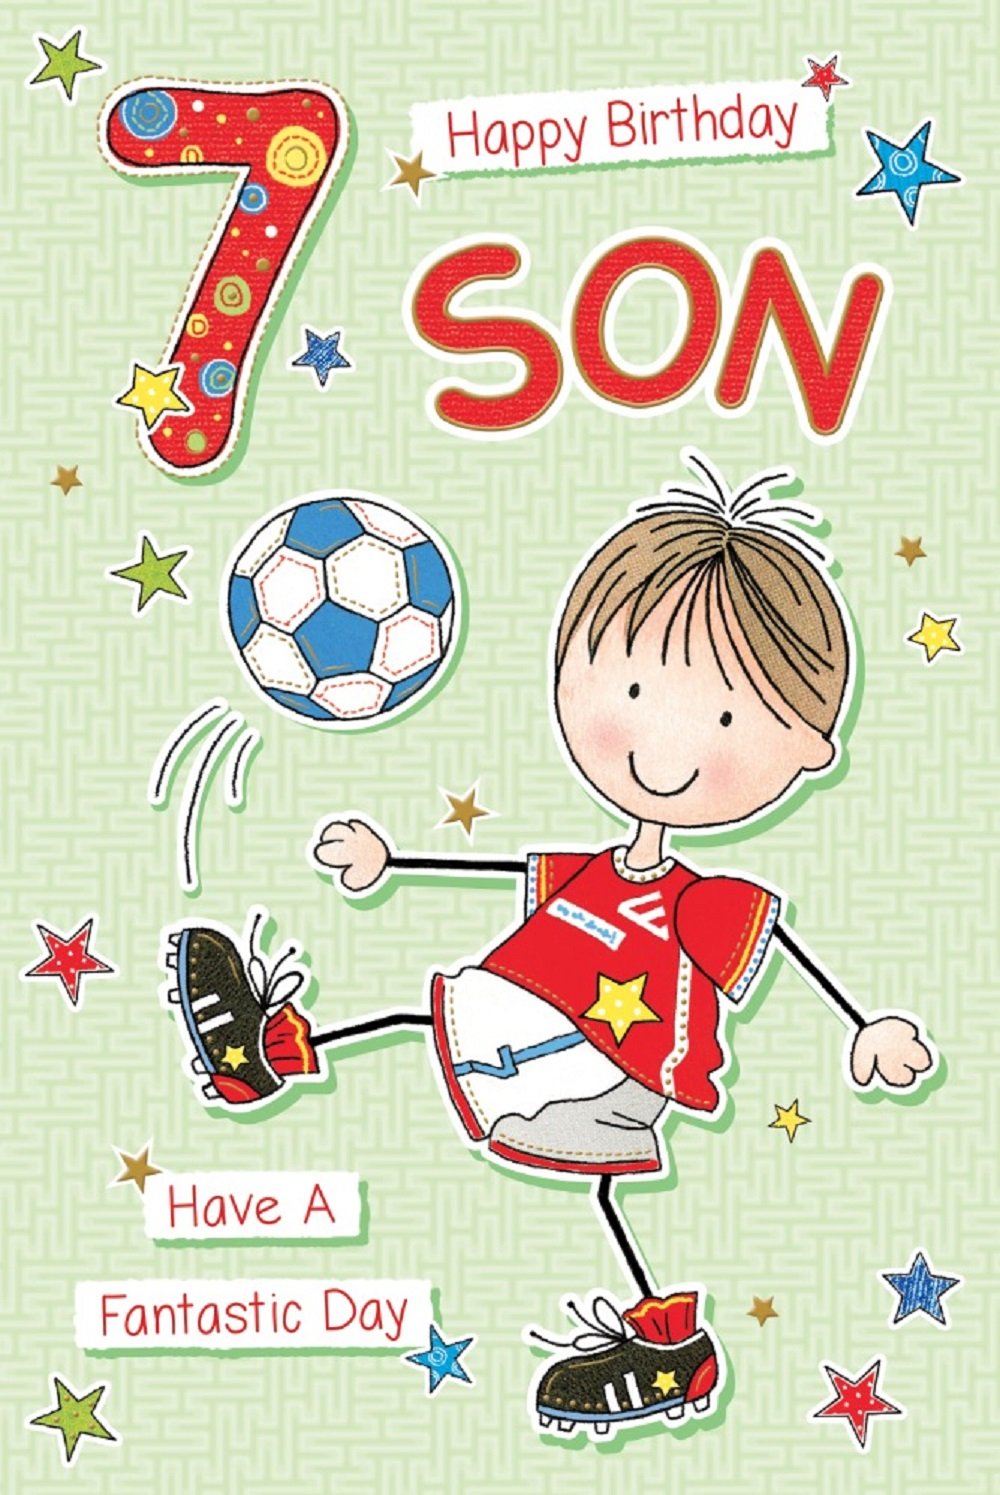 Son 7th Birthday Card - The Football Kick